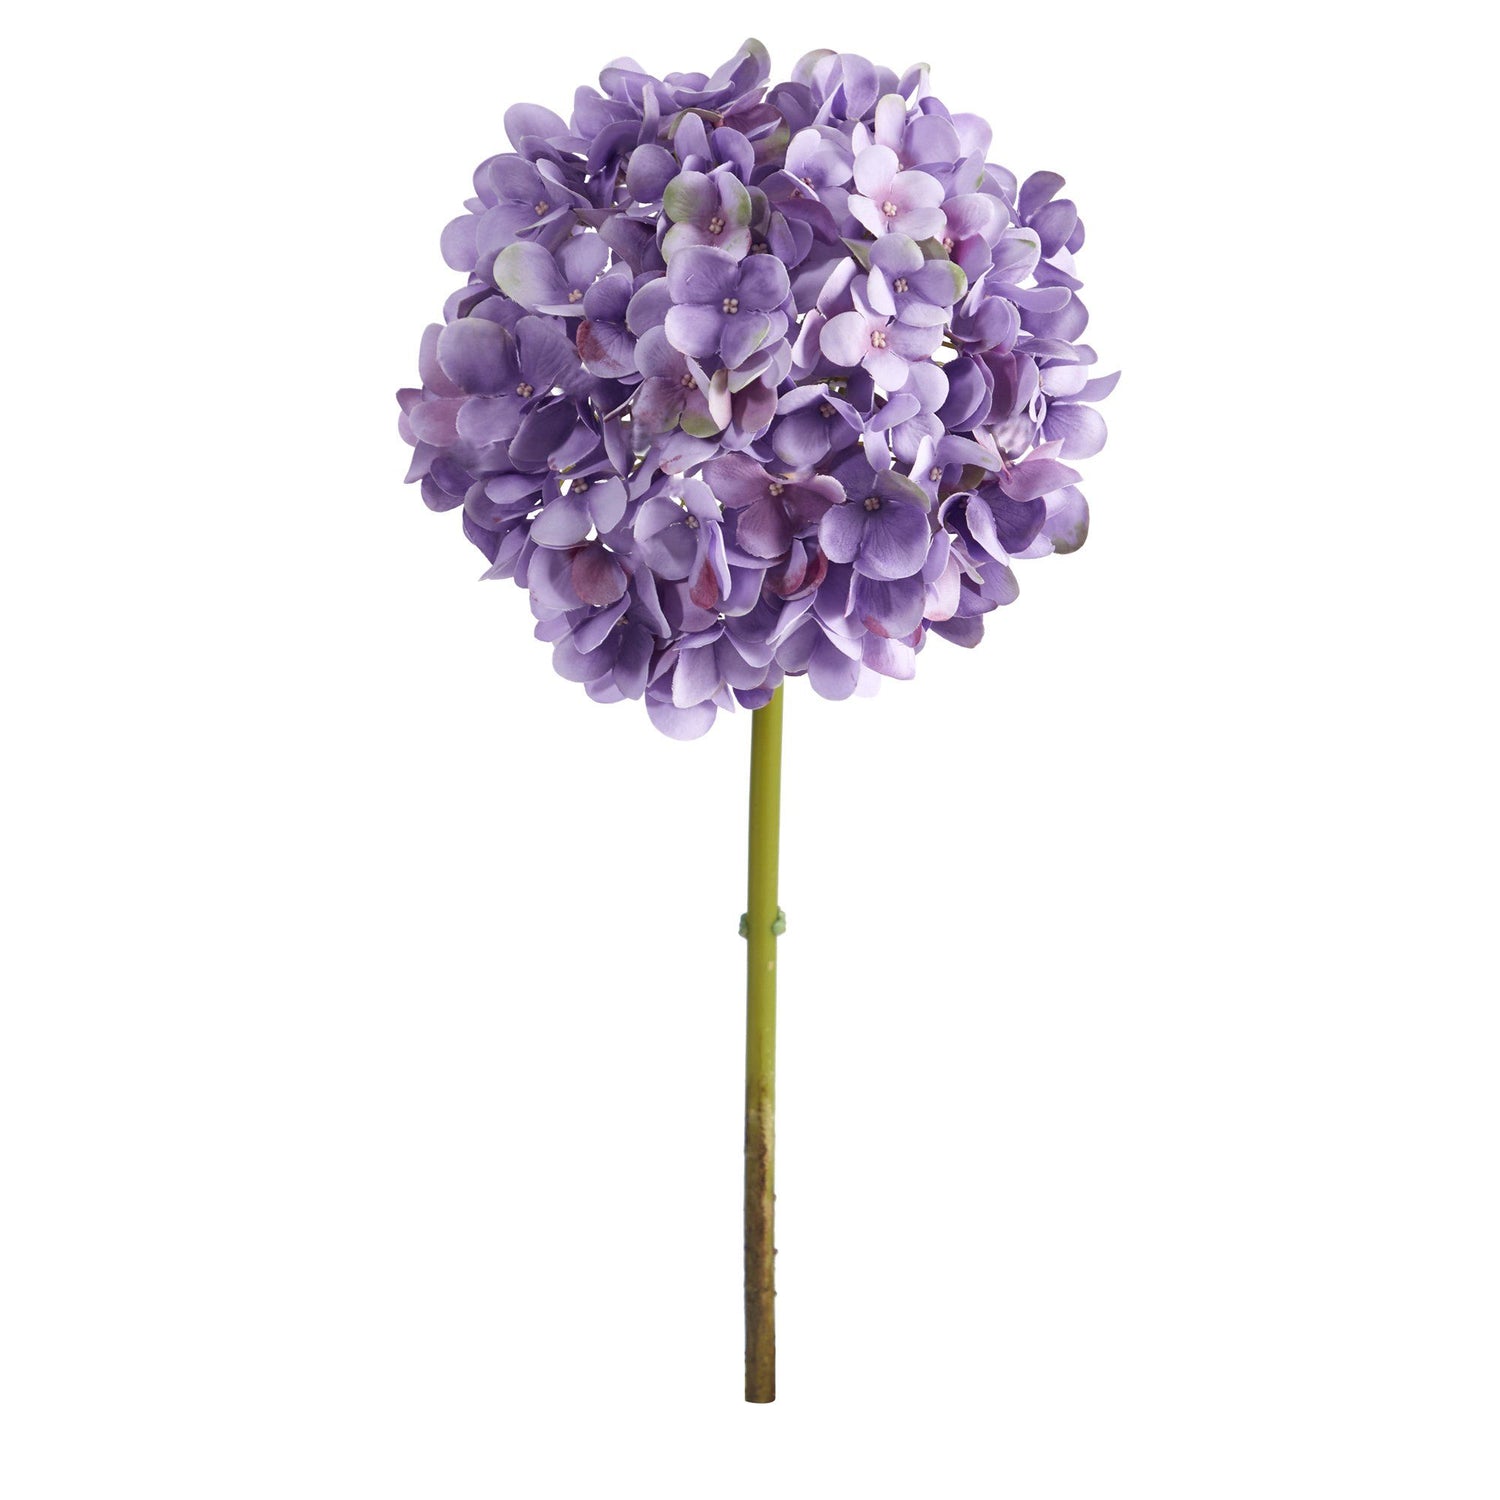 19” Artificial Hydrangea Flower (Set of 3 Silk Flower Stems)